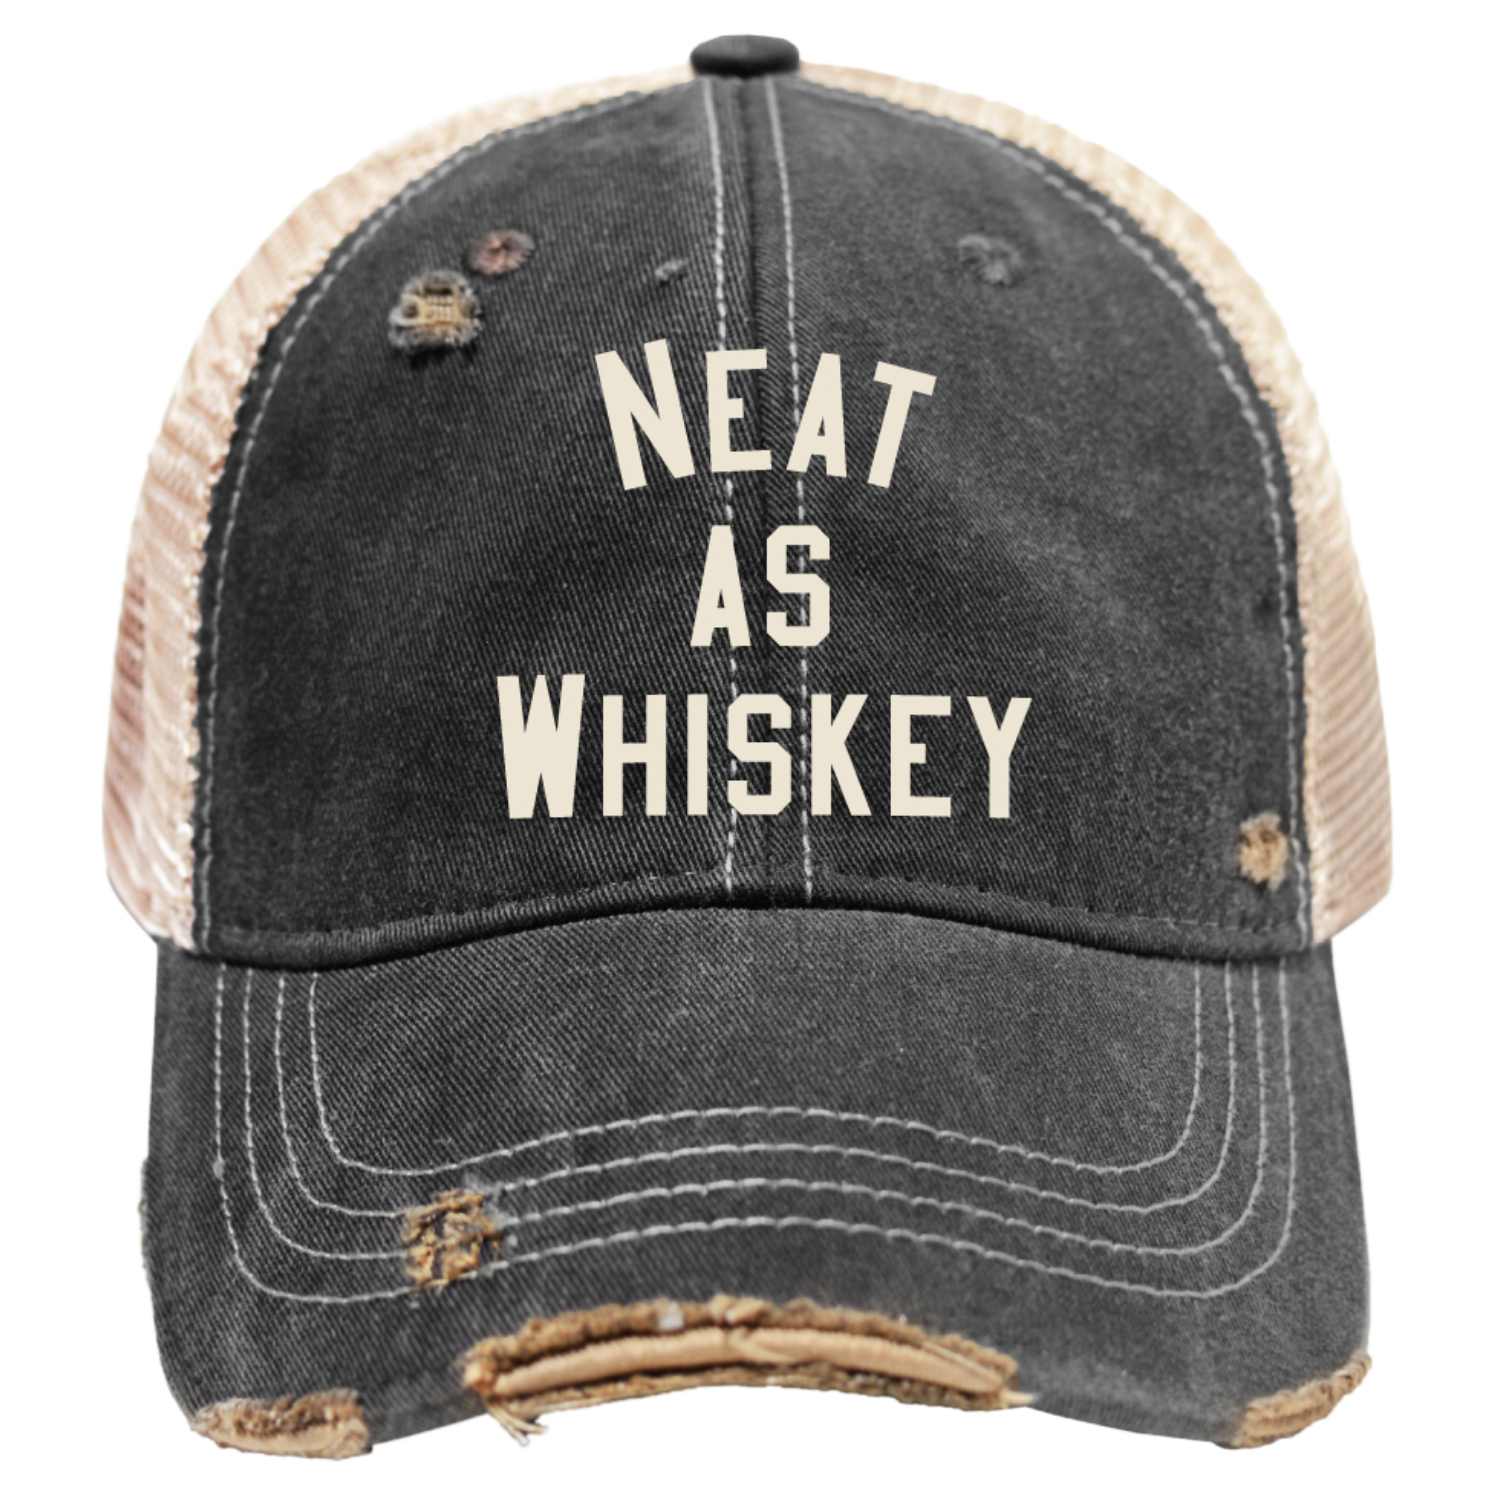 Neat As Whiskey Vintage Snap Back Trucker Cap